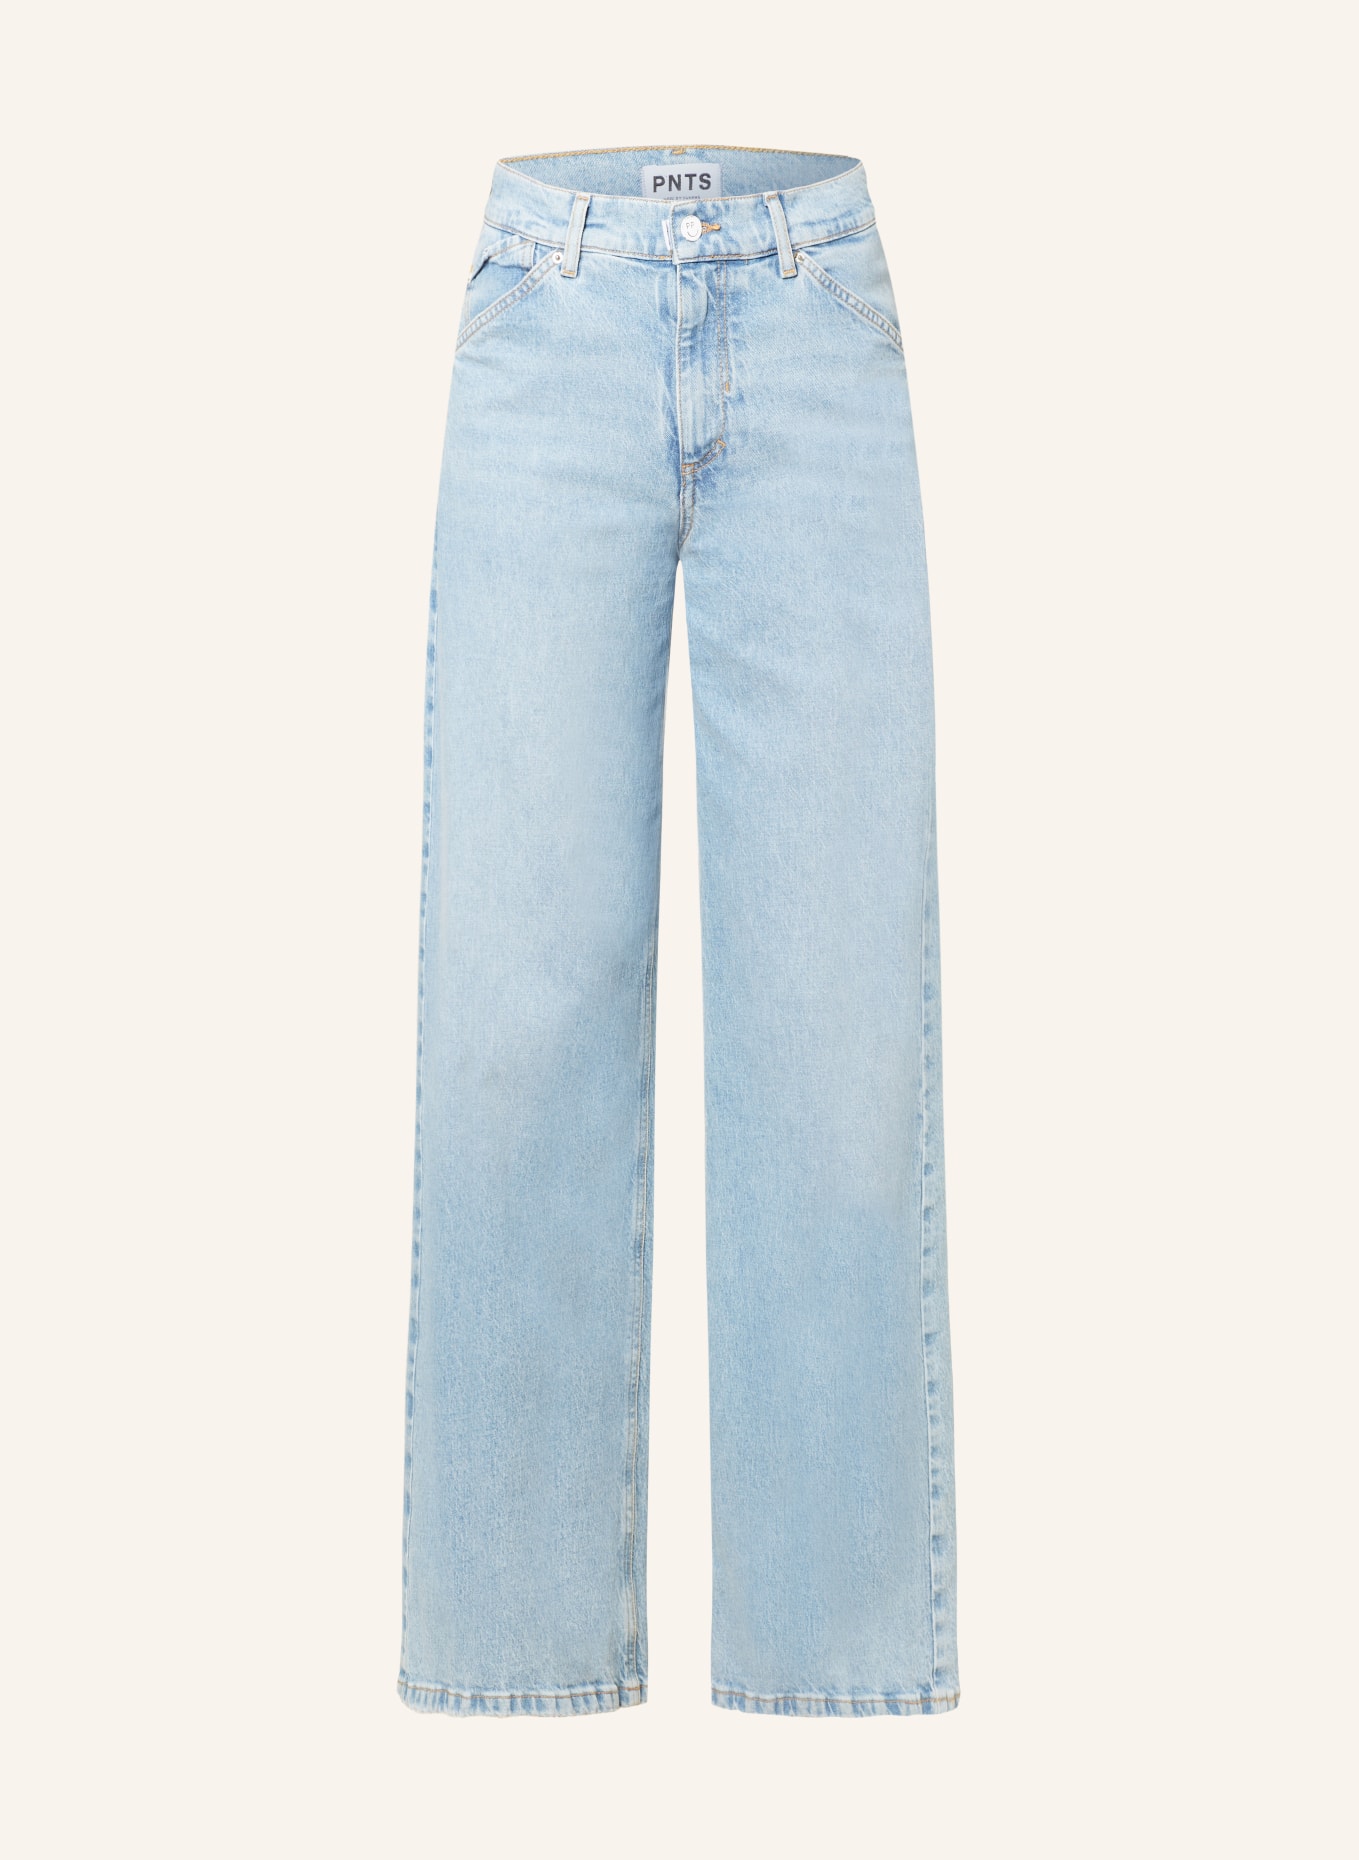 PNTS Straight Jeans THE RAVER, Farbe: 26 LIGHT BLUE (Bild 1)